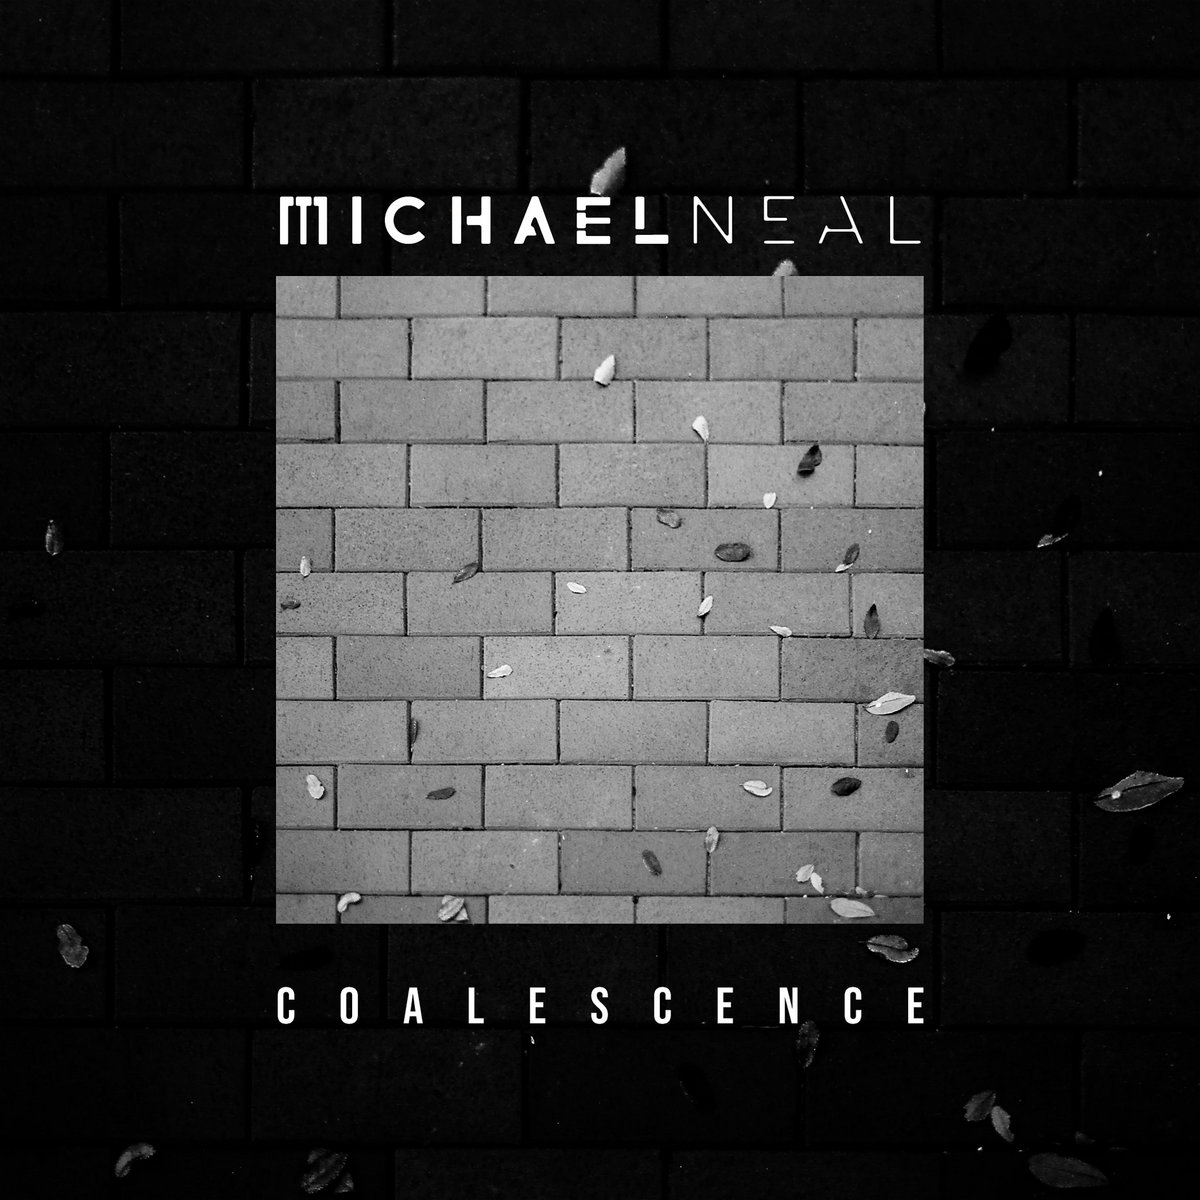 Michael Neal – “Coalescence”